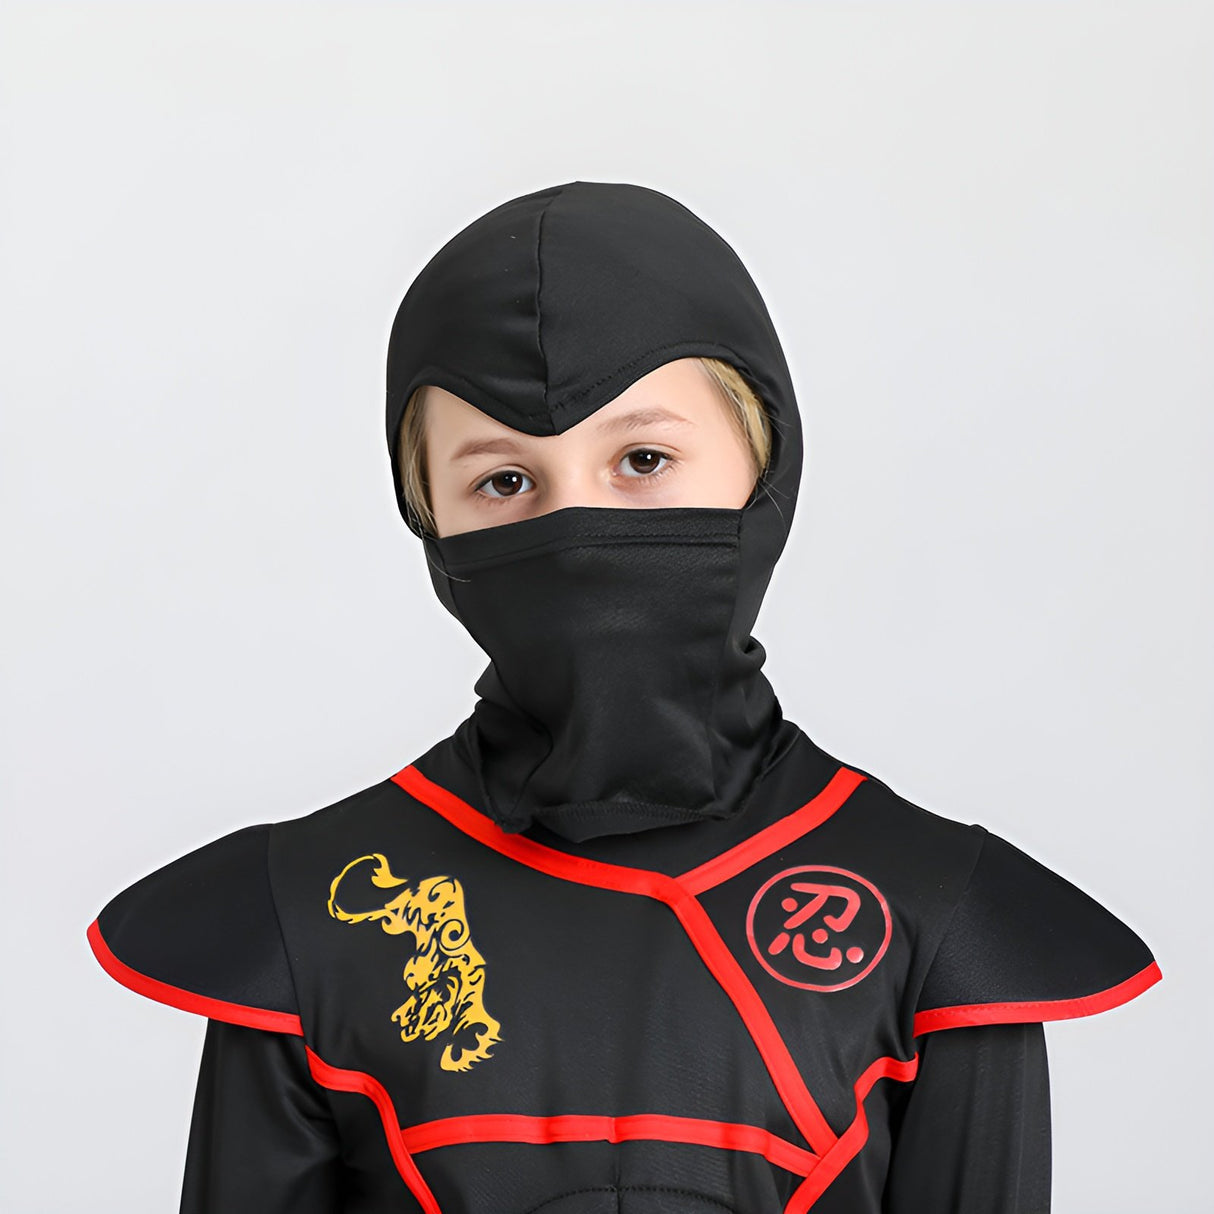 Muscle Dragon Red Ninja Costume